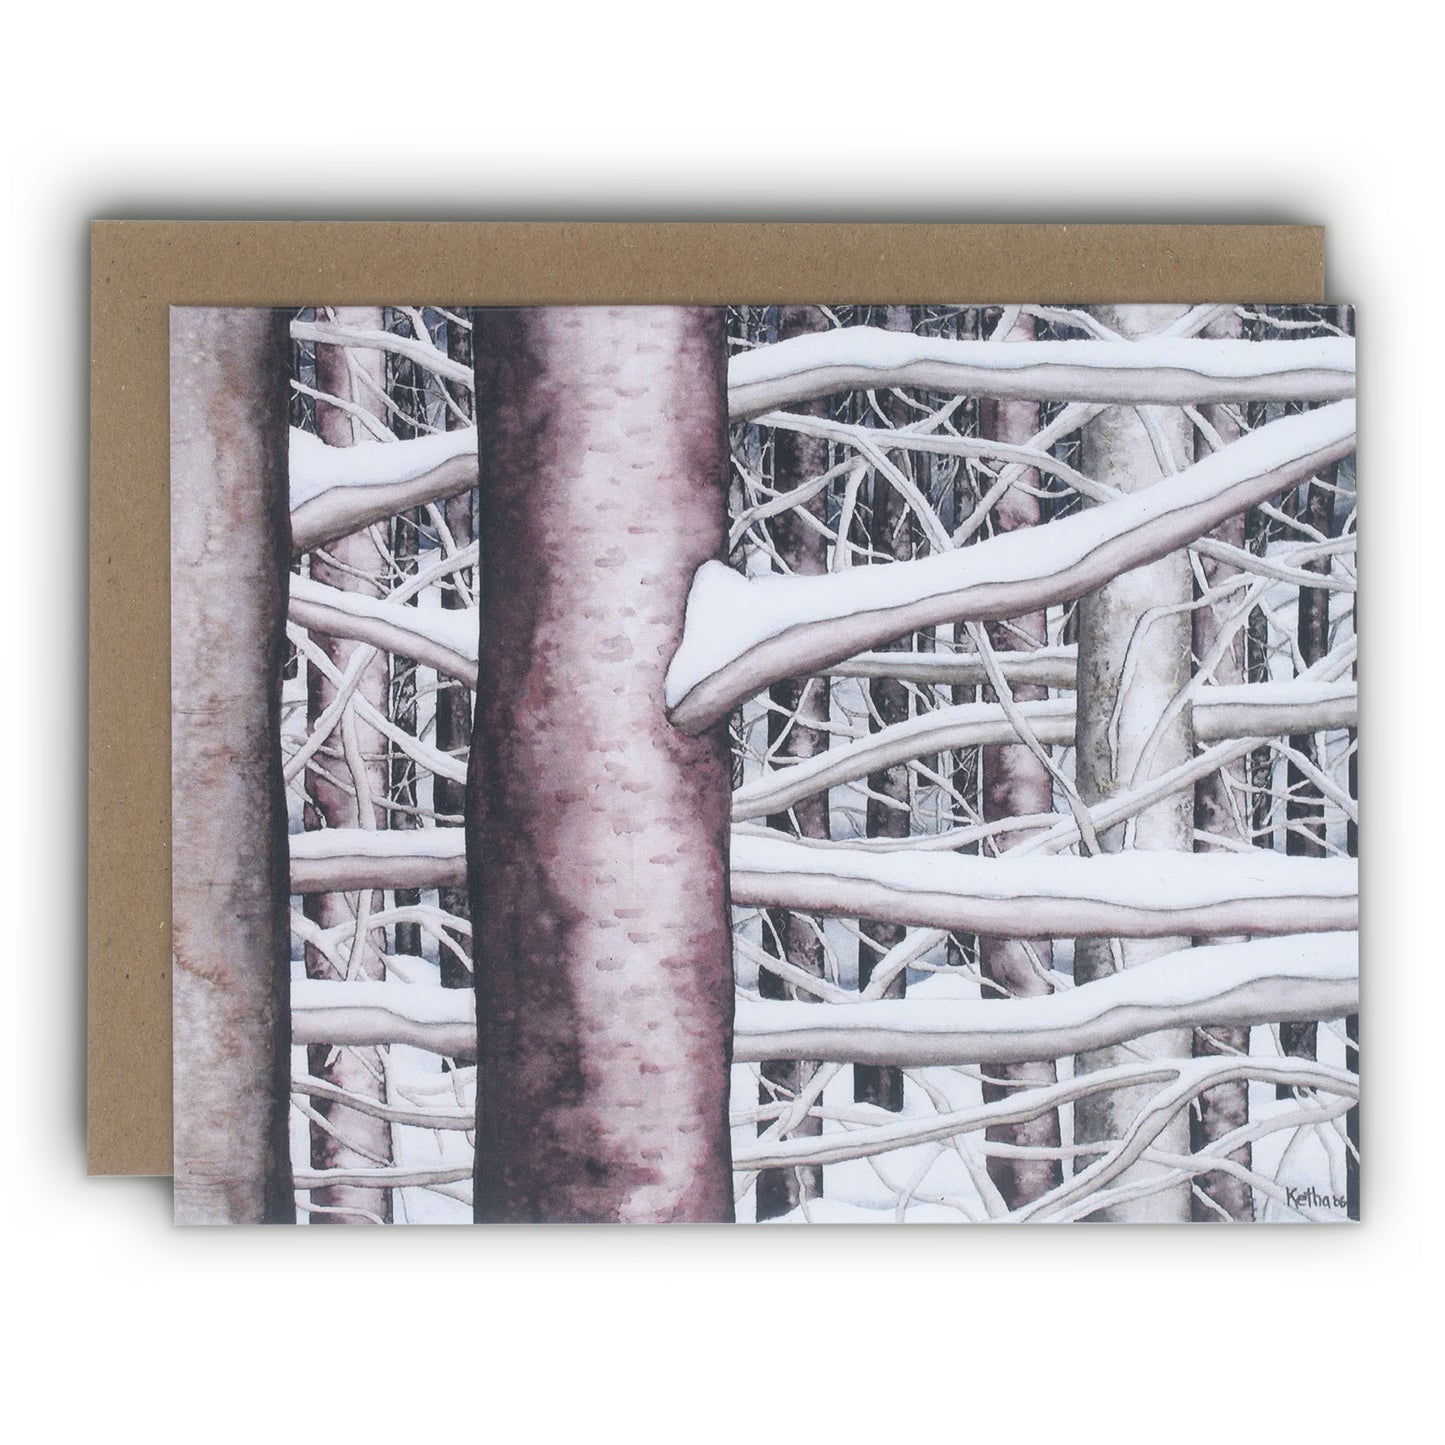 Ketha Newman Winter Art Cards Boxset